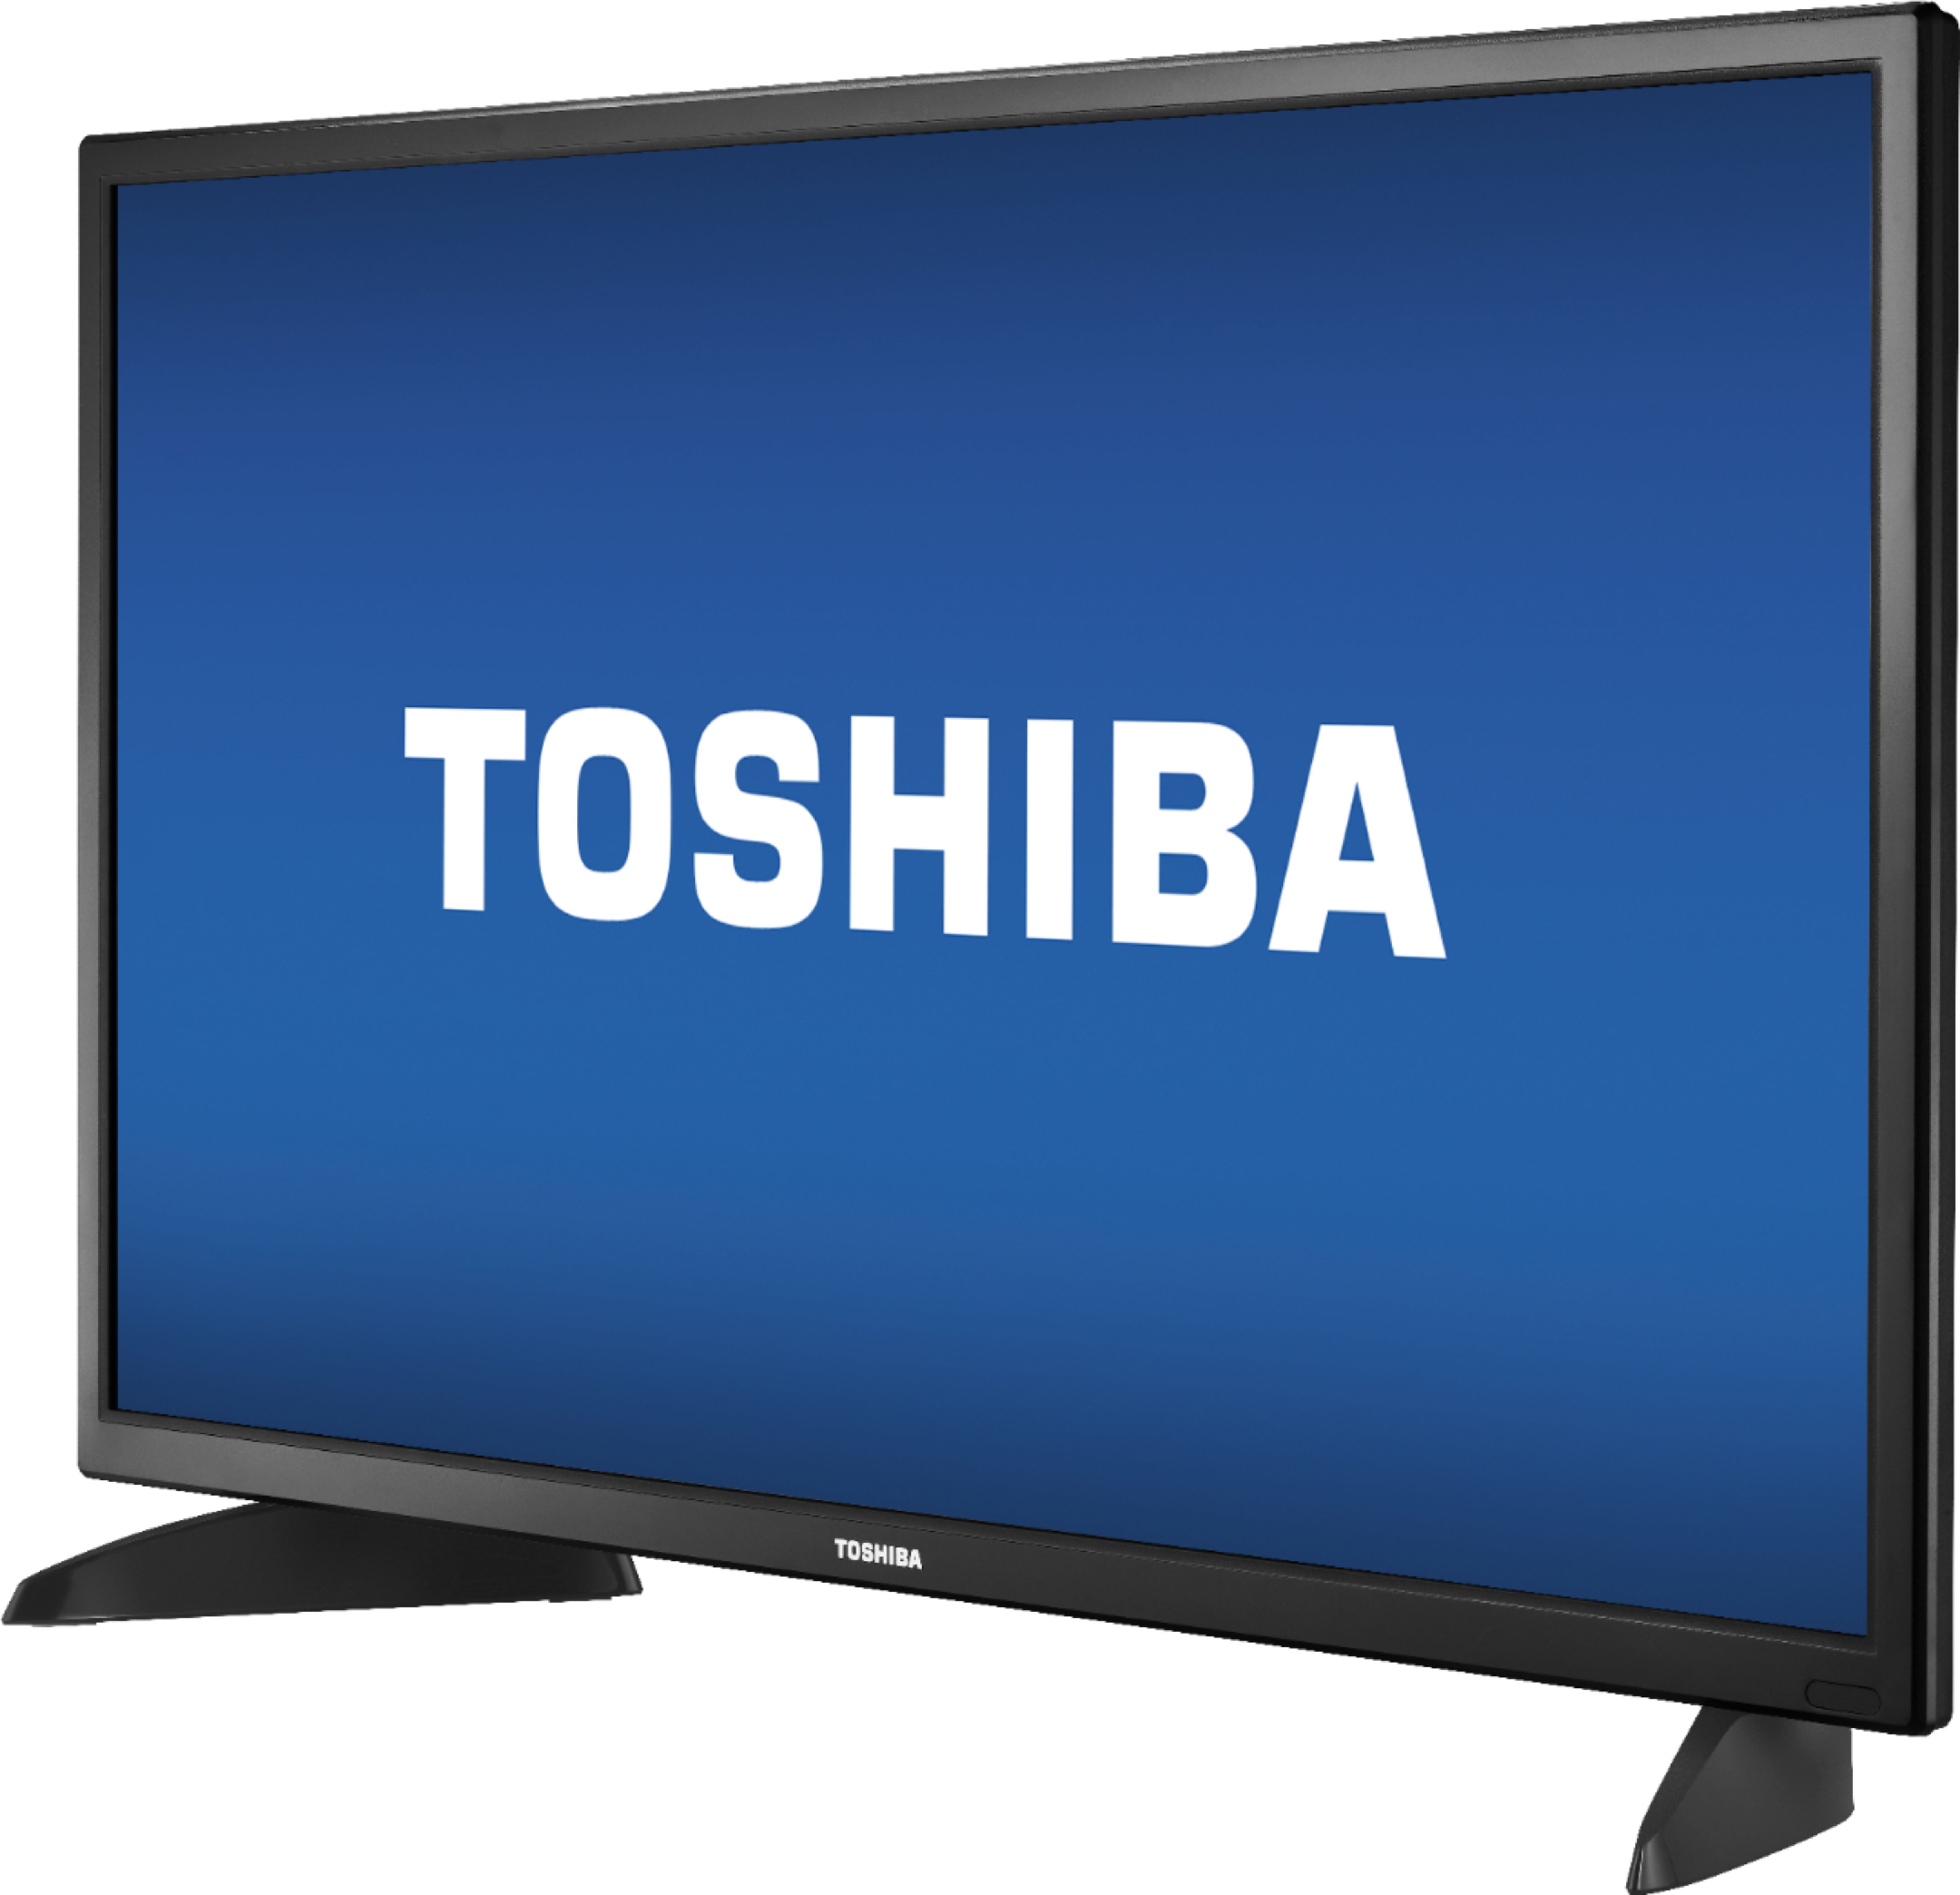 Left View: Toshiba - N300 4TB Internal SATA NAS Hard Drive for Desktops